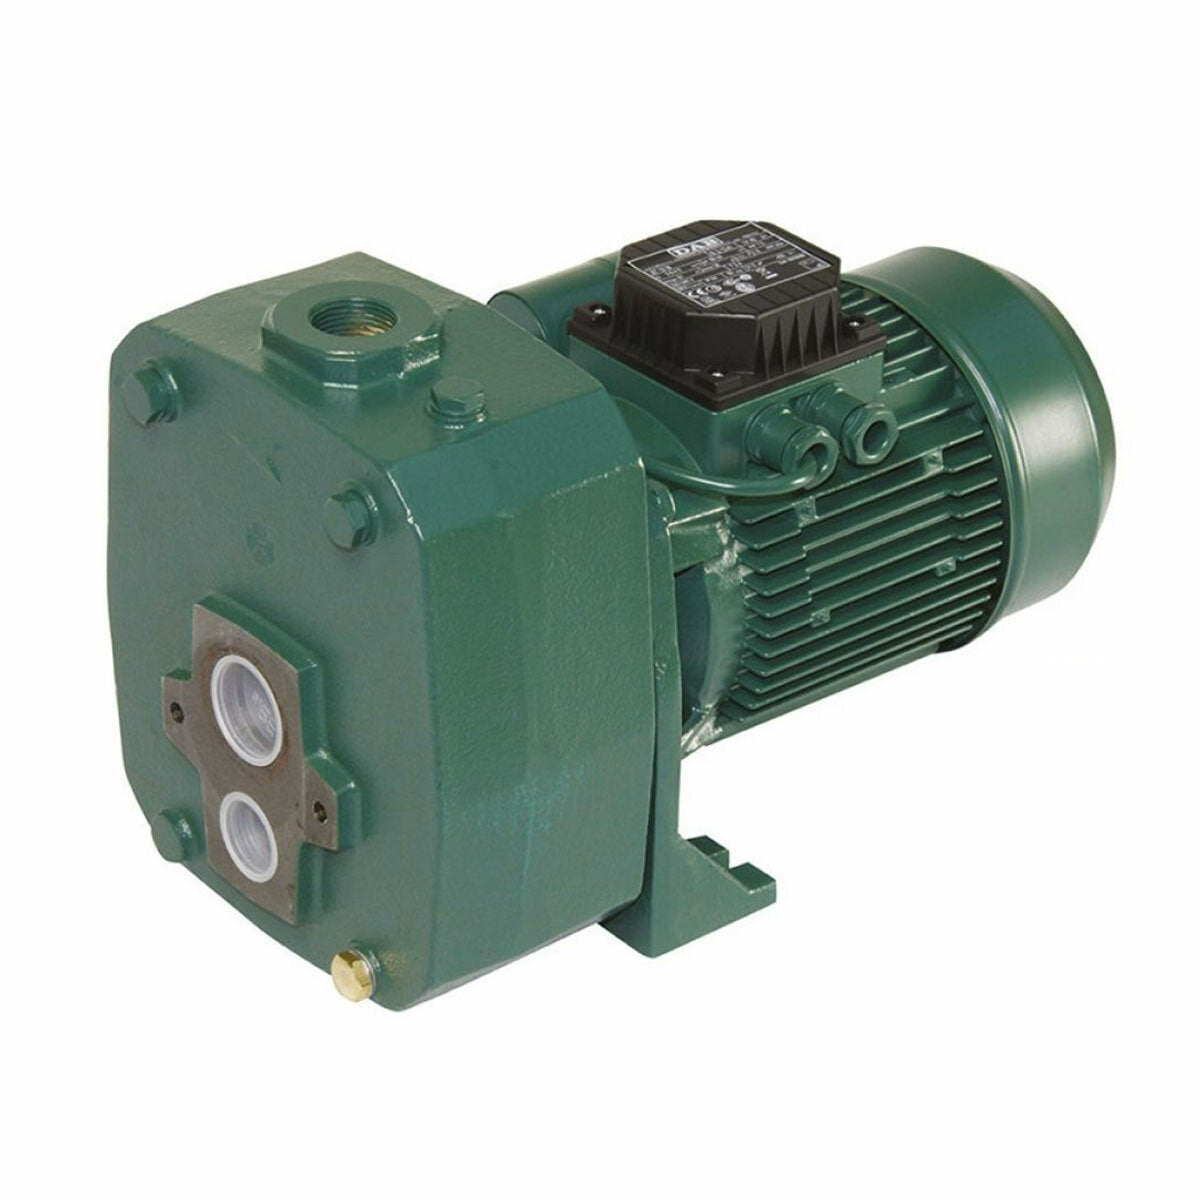 DAB DP 151 M self-priming centrifugal pump single-phase 1.5 HP/1.1 kW